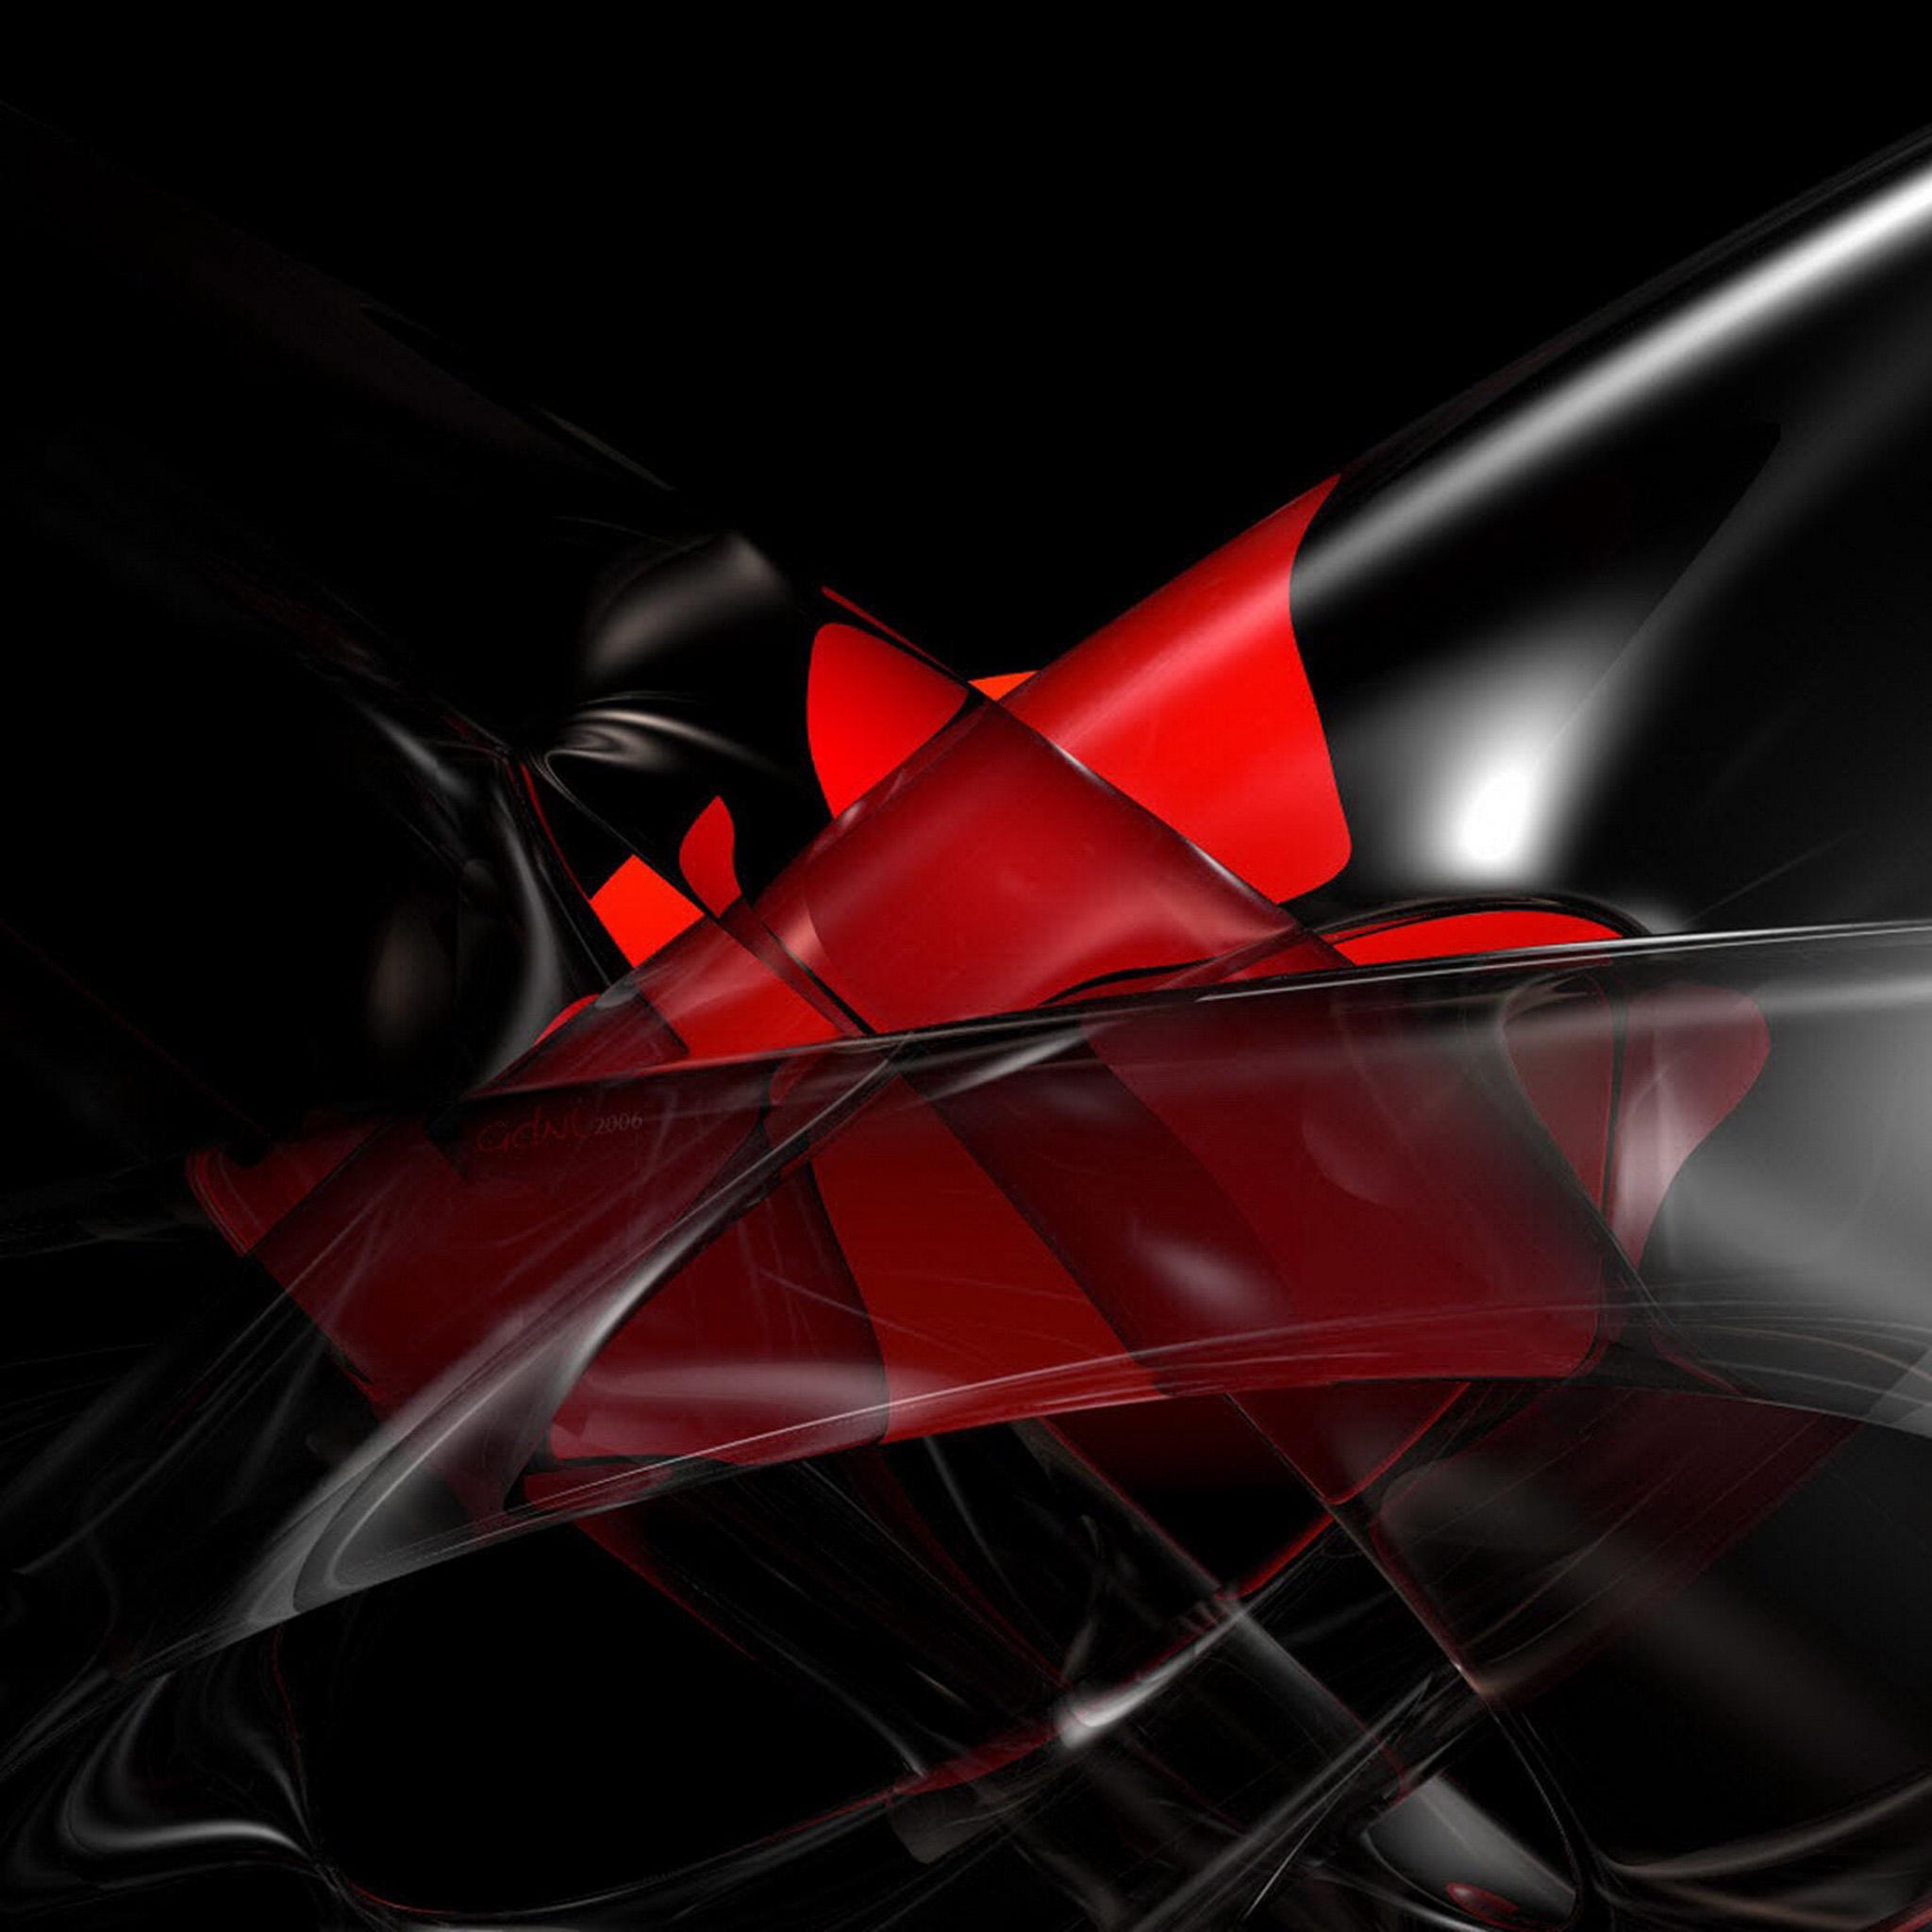 ipad wallpaper retina,red,black,automotive design,carmine,automotive lighting